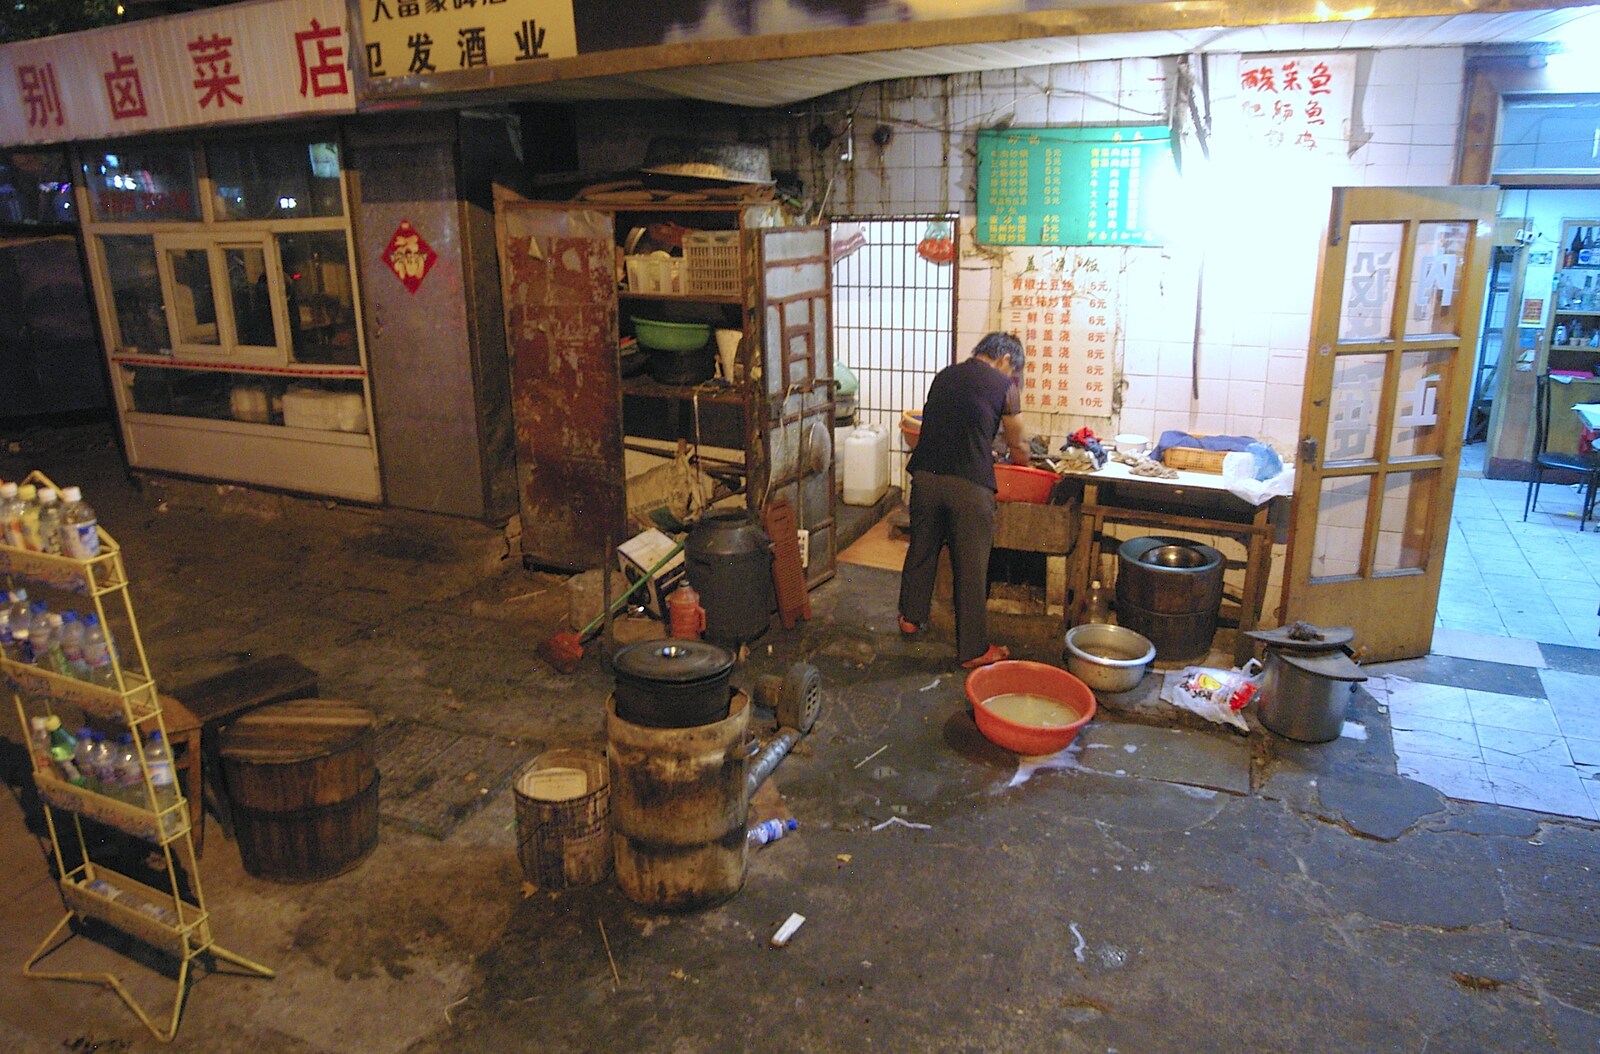 Doing the washing up on the pavement from Nanjing by Night, Nanjing, Jiangsu Province, China - 4th October 2006